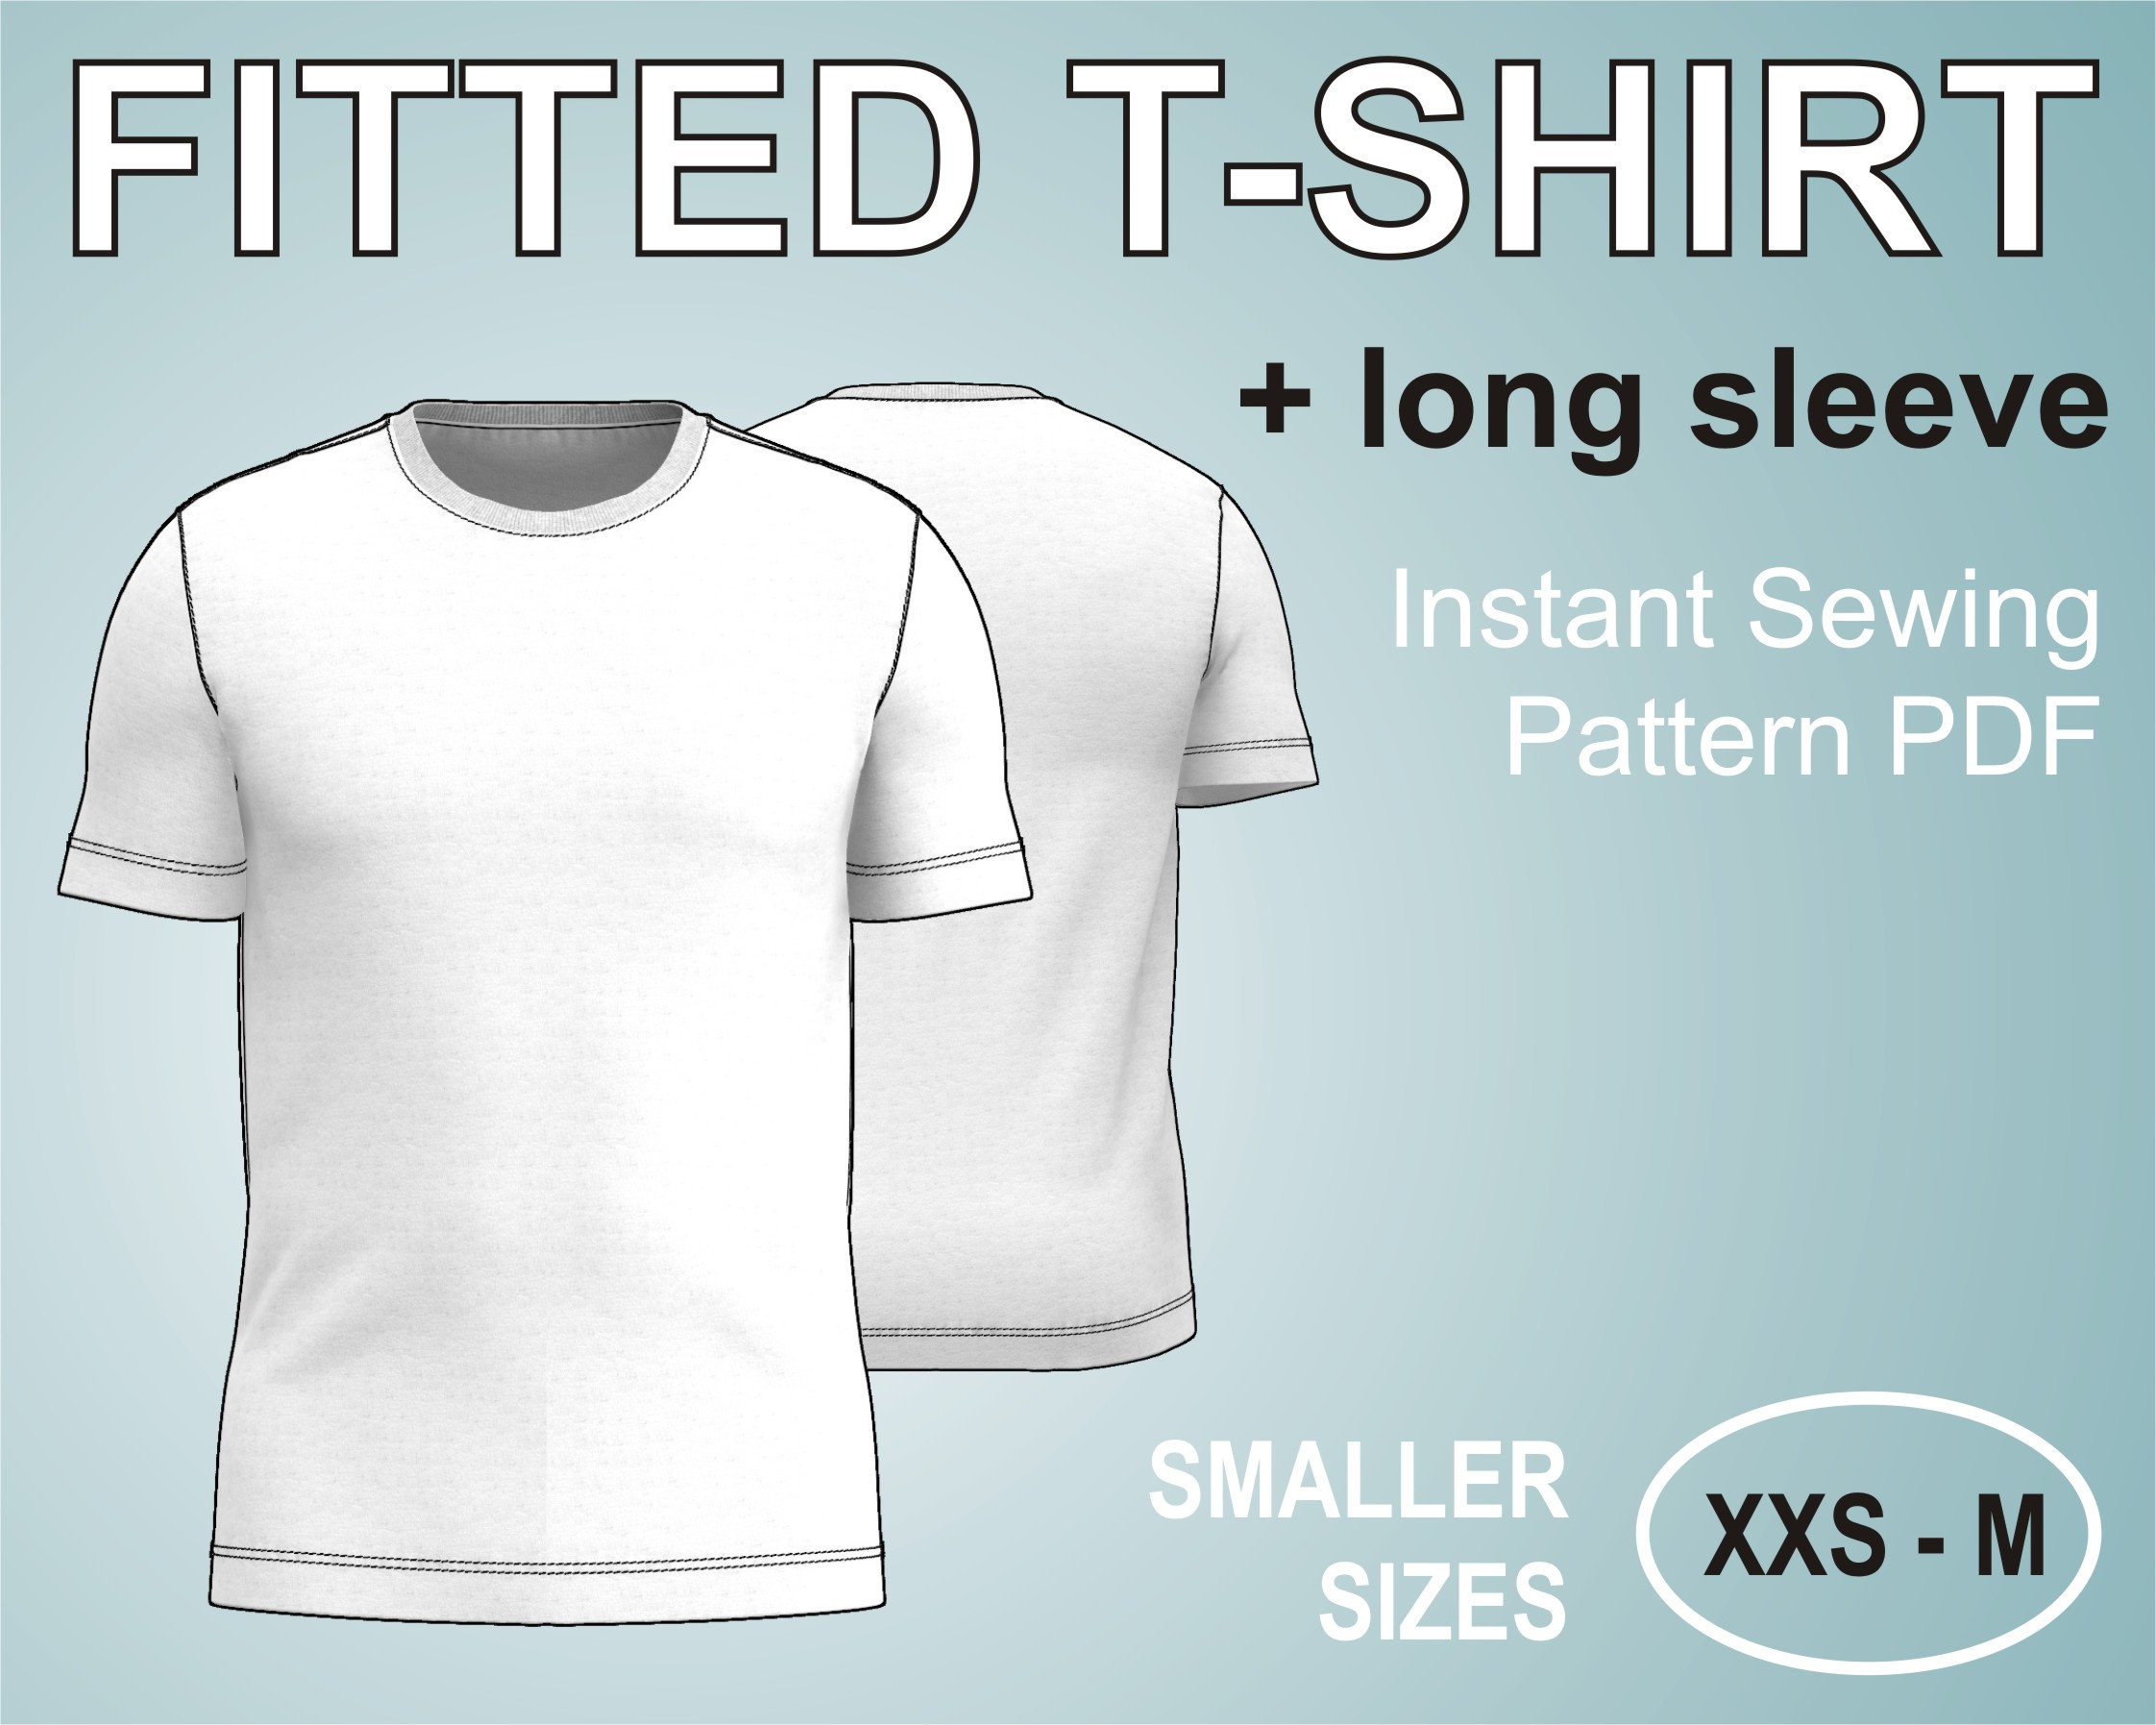 Maker T-shirt Sewing Pattern Digital PDF Printable Patterns